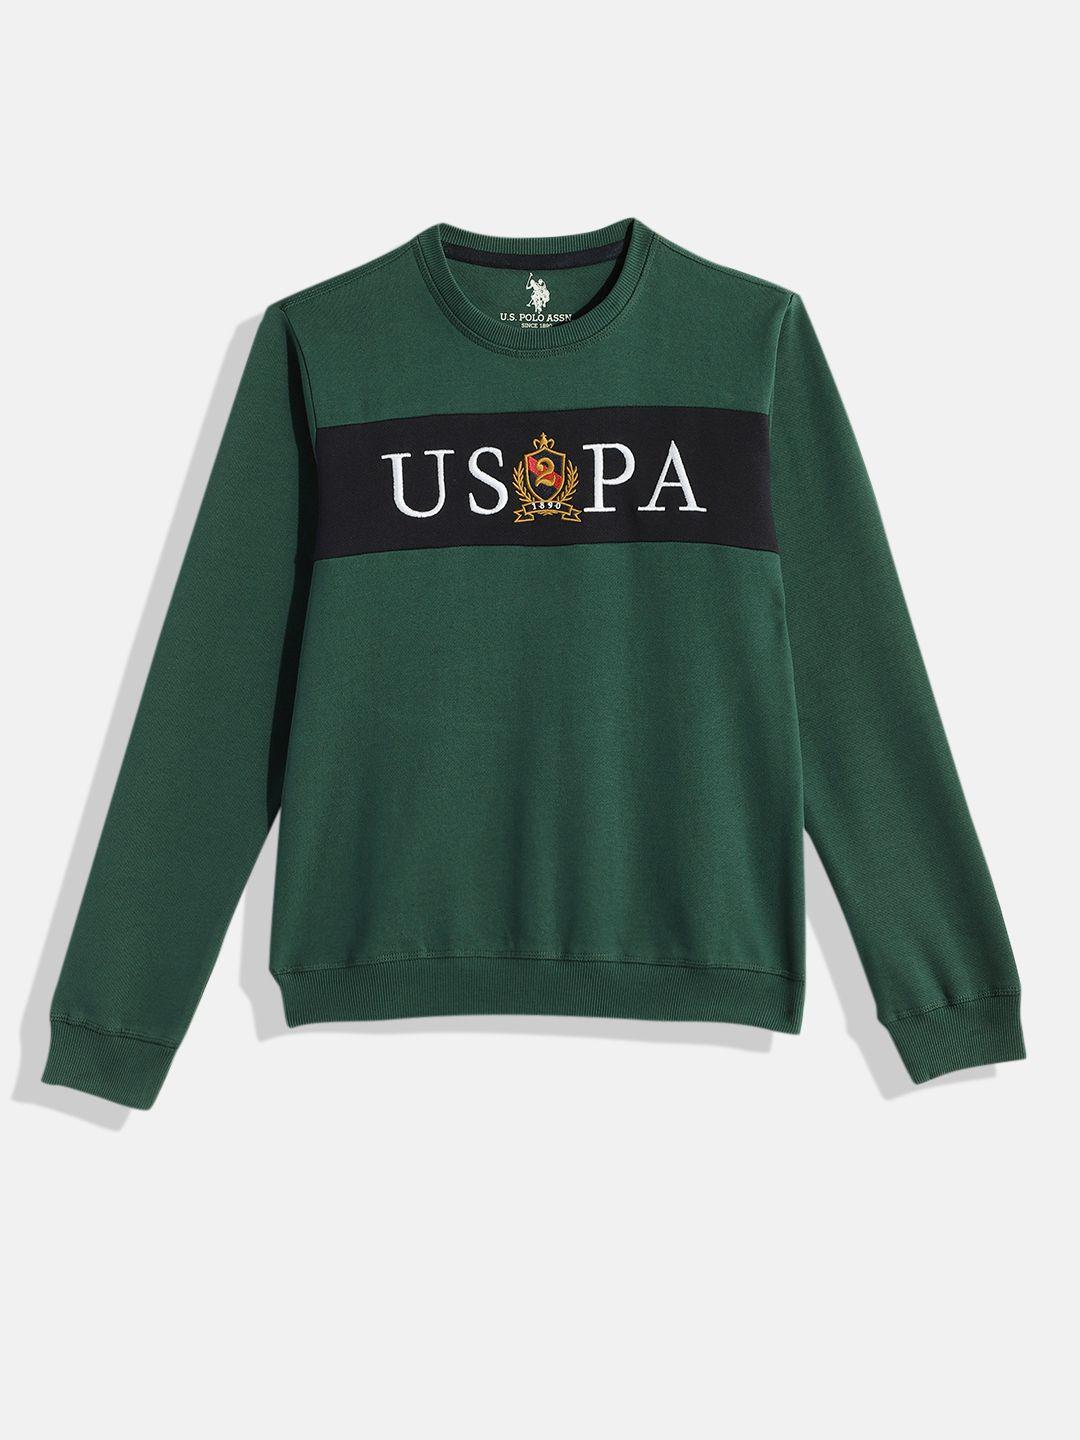 u.s. polo assn. kids boys green brand logo printed round neck sweatshirt